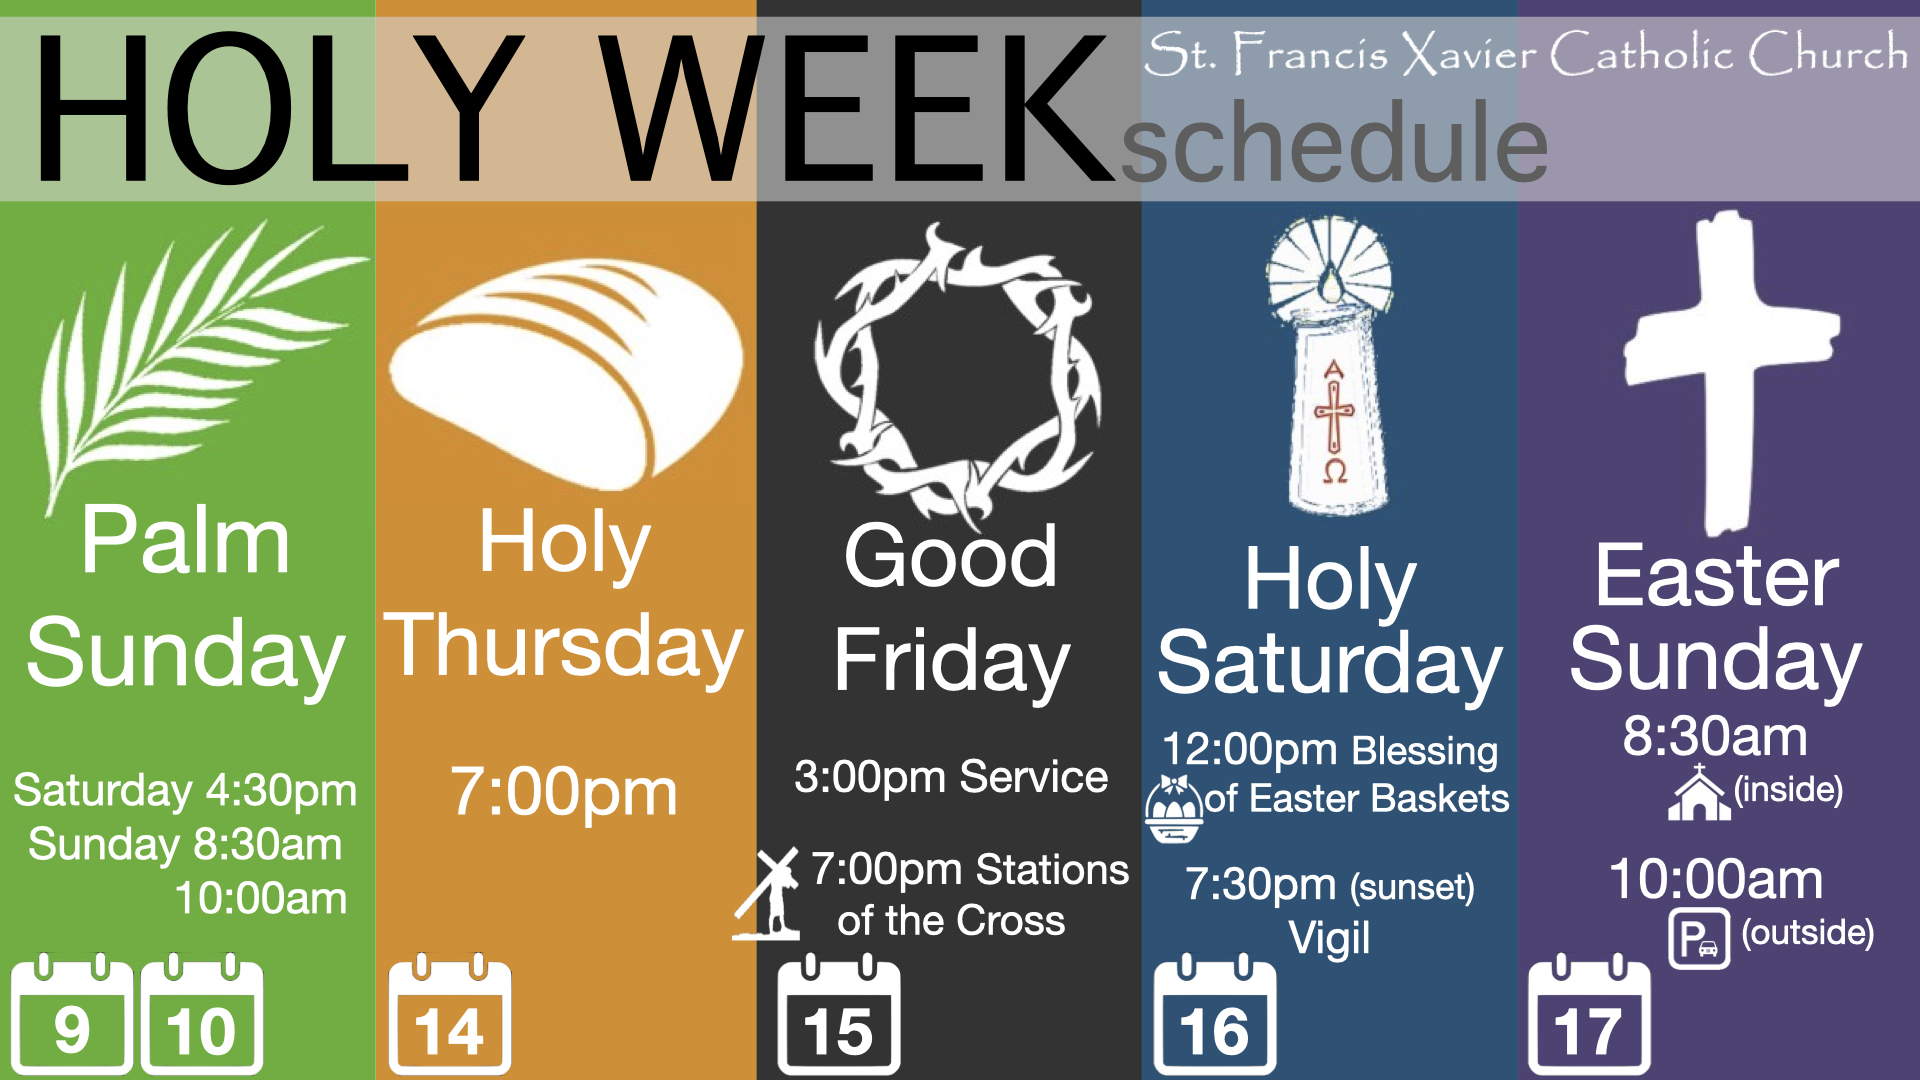 Holy Week schedule SFX